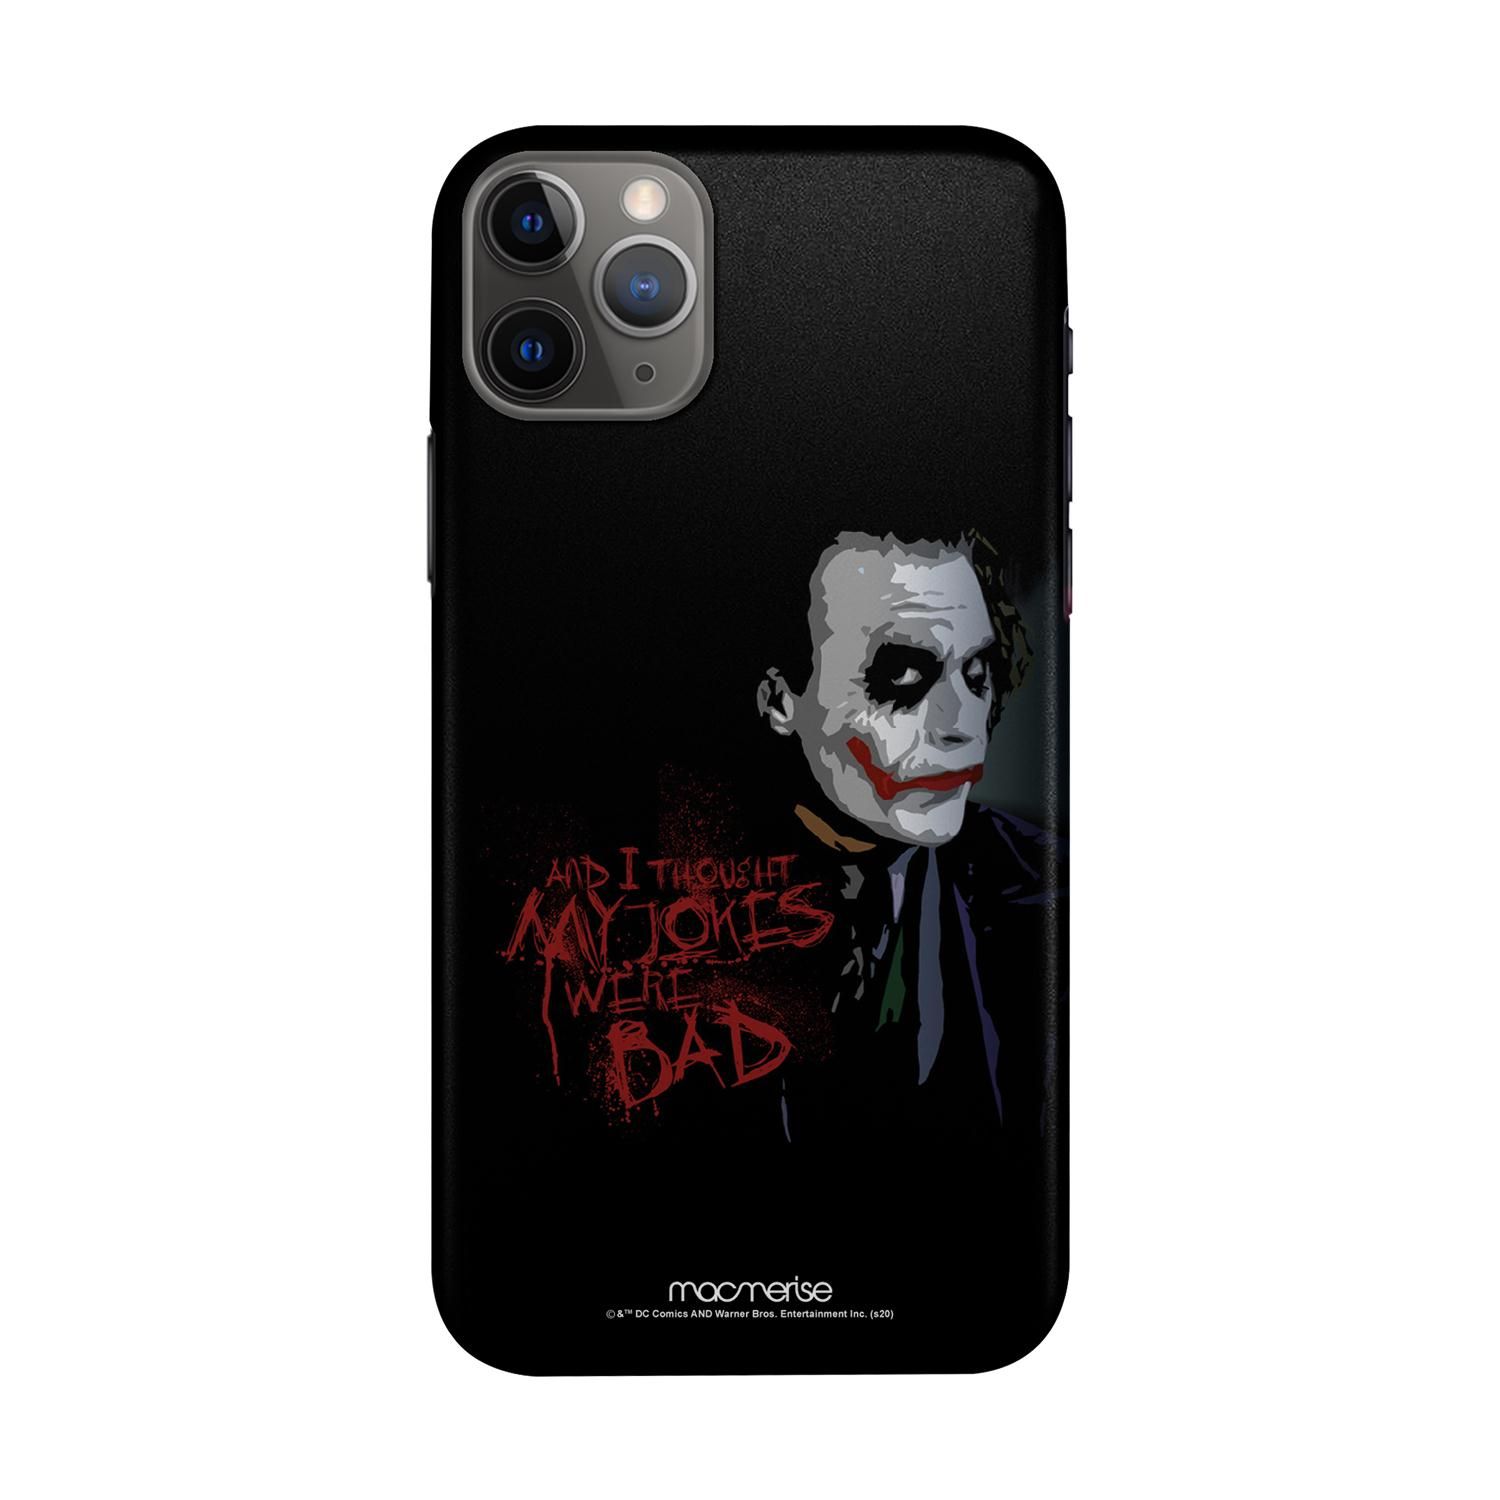 Buy Jokers Sarcasm - Sleek Phone Case for iPhone 11 Pro Max Online